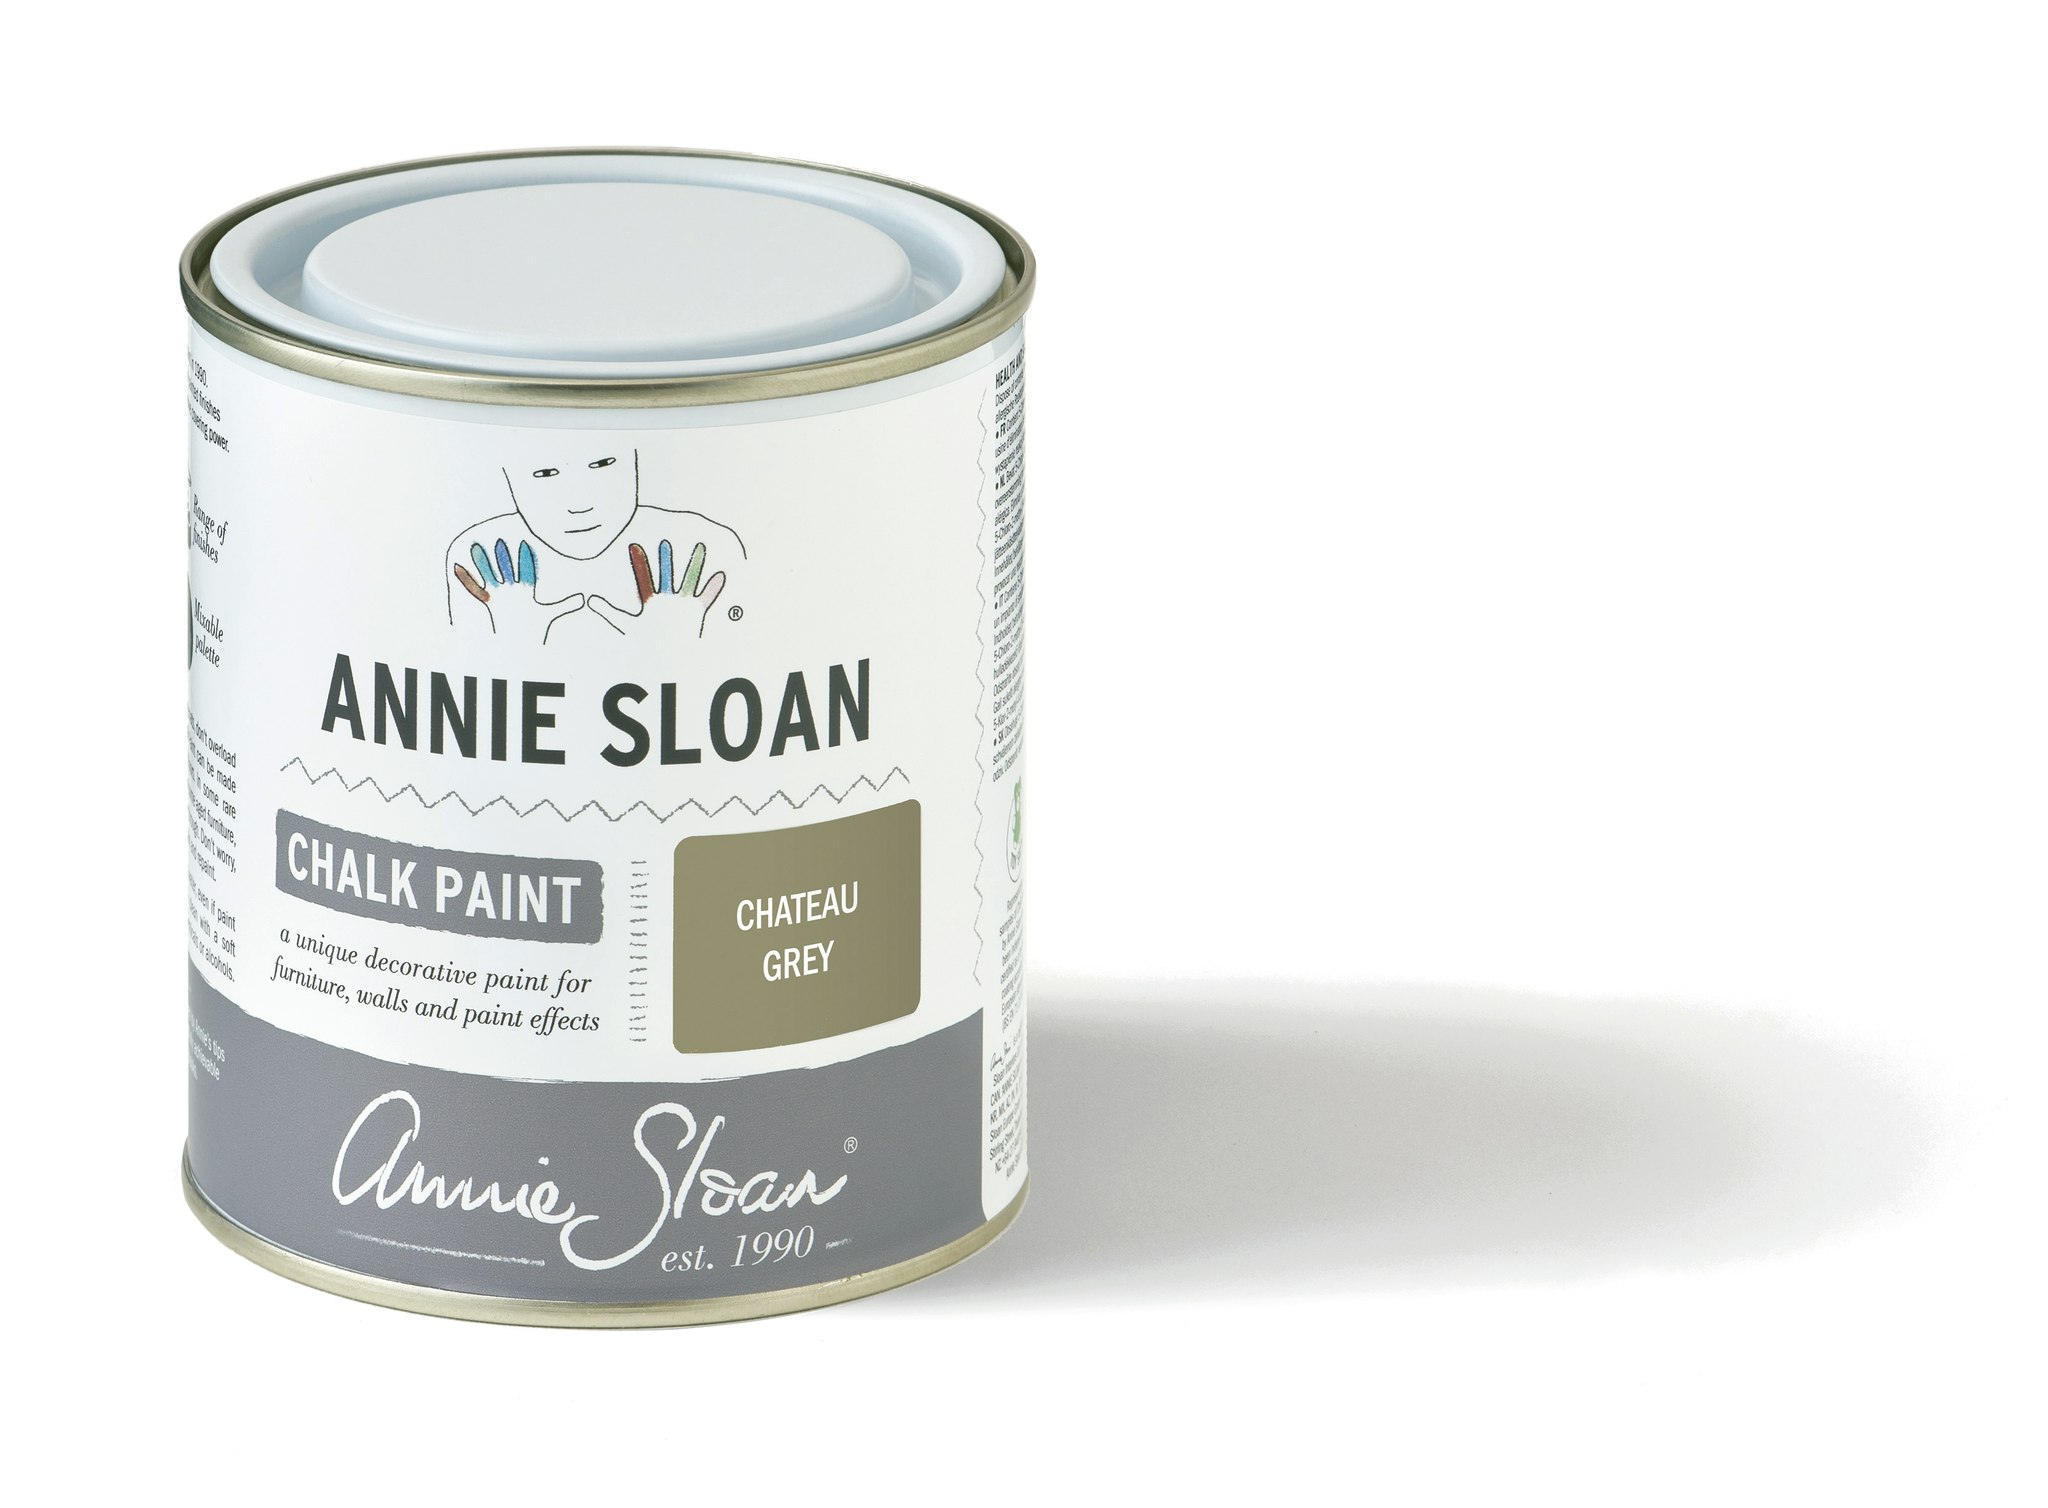 Annie Sloan Chalk paint Chateau Grey Glada ungmöns diversehandel